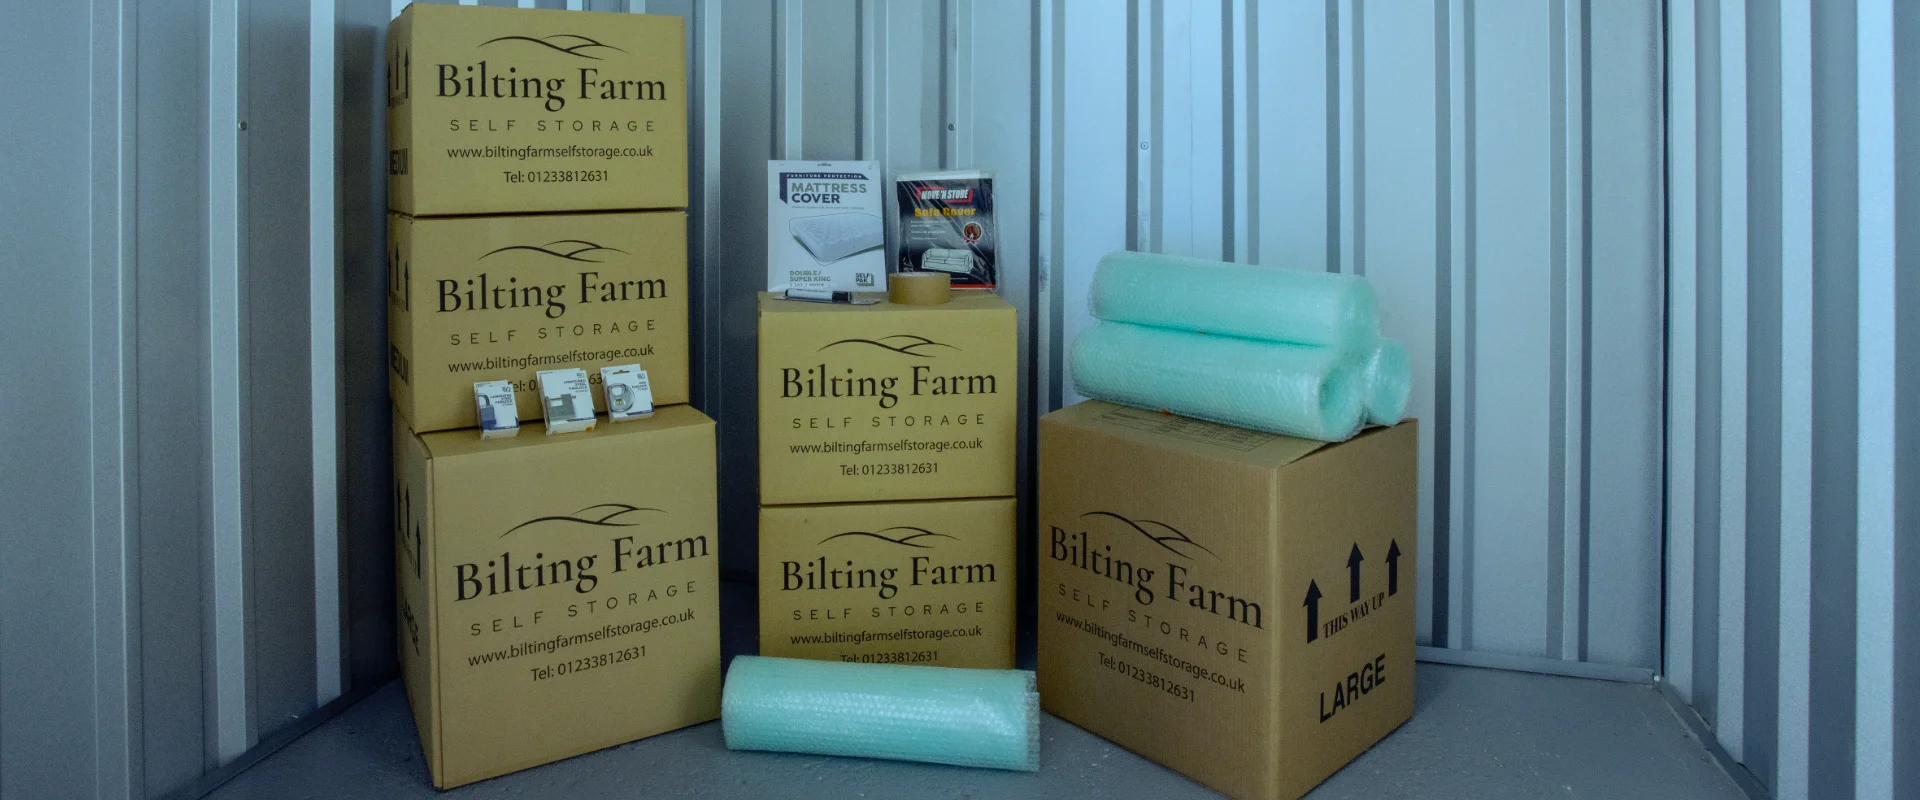 About Bilting Farm Self Storage